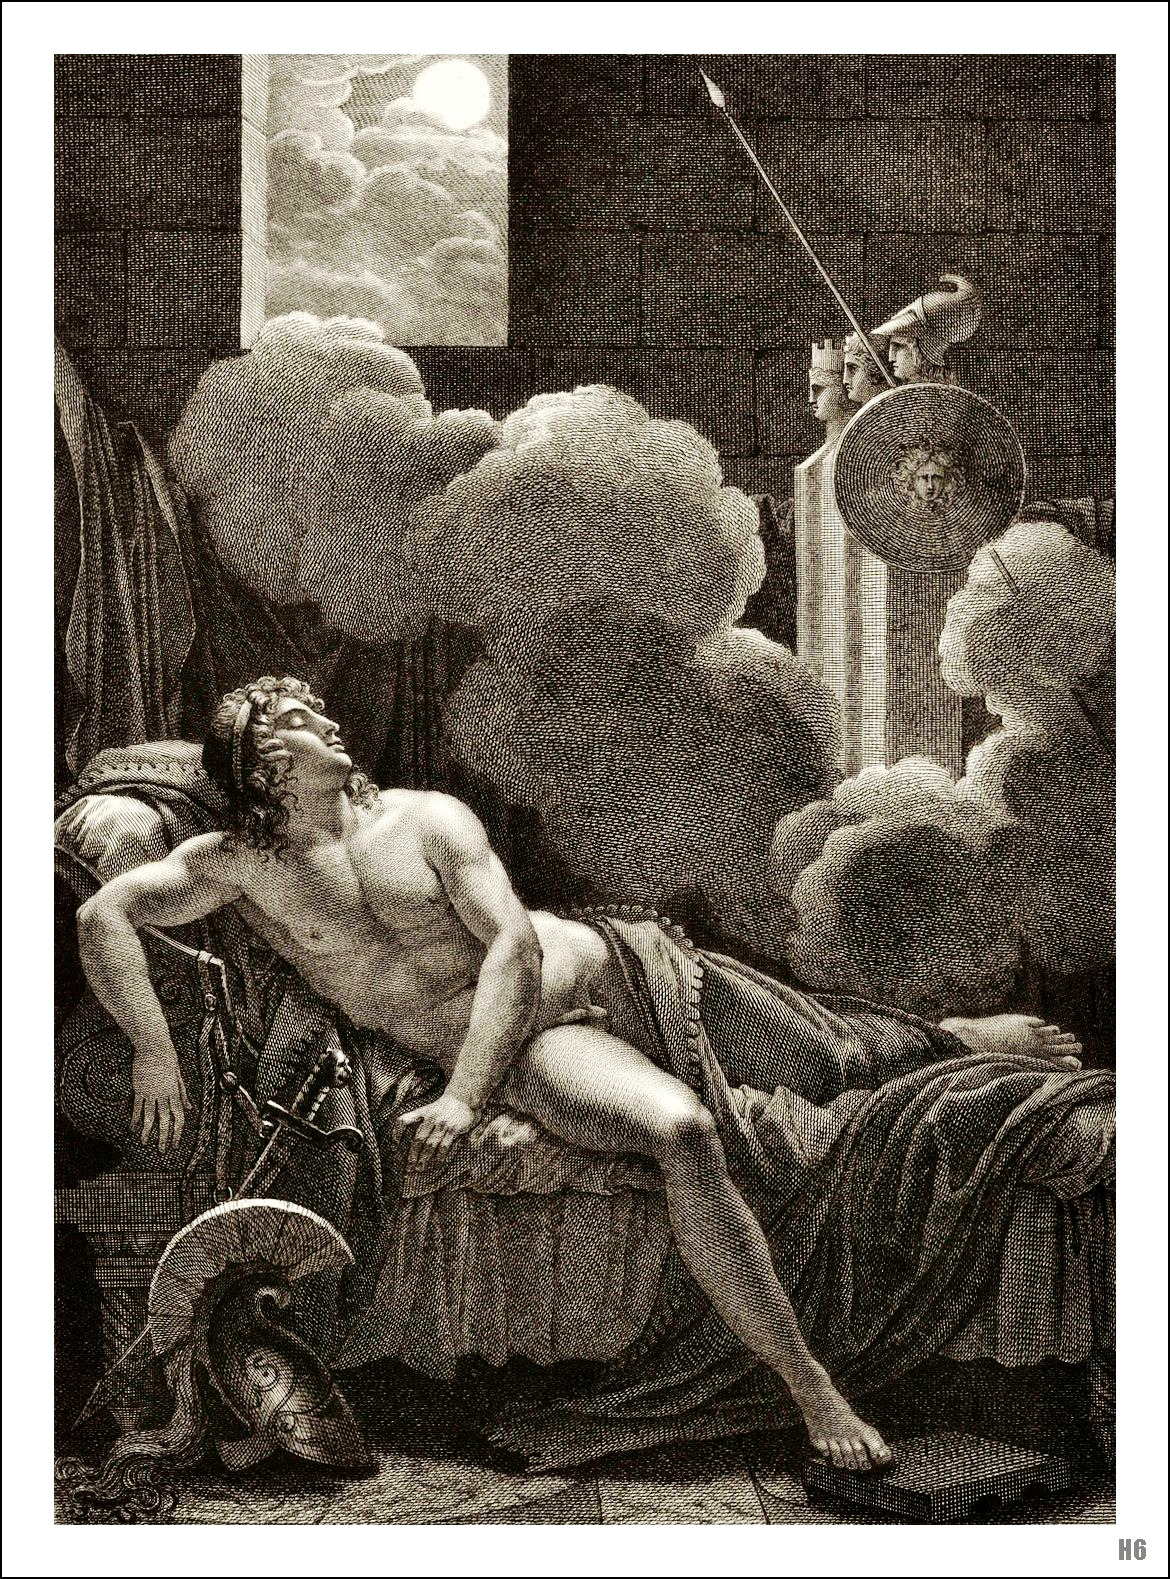 The Dreams of Aeneas. 1829. illustration from Virgil&#8217;s Aeneid. Anne Louis Girodet de Roussy Trioson. French 1767-1824. engraving.
http://hadrian6.tumblr.com